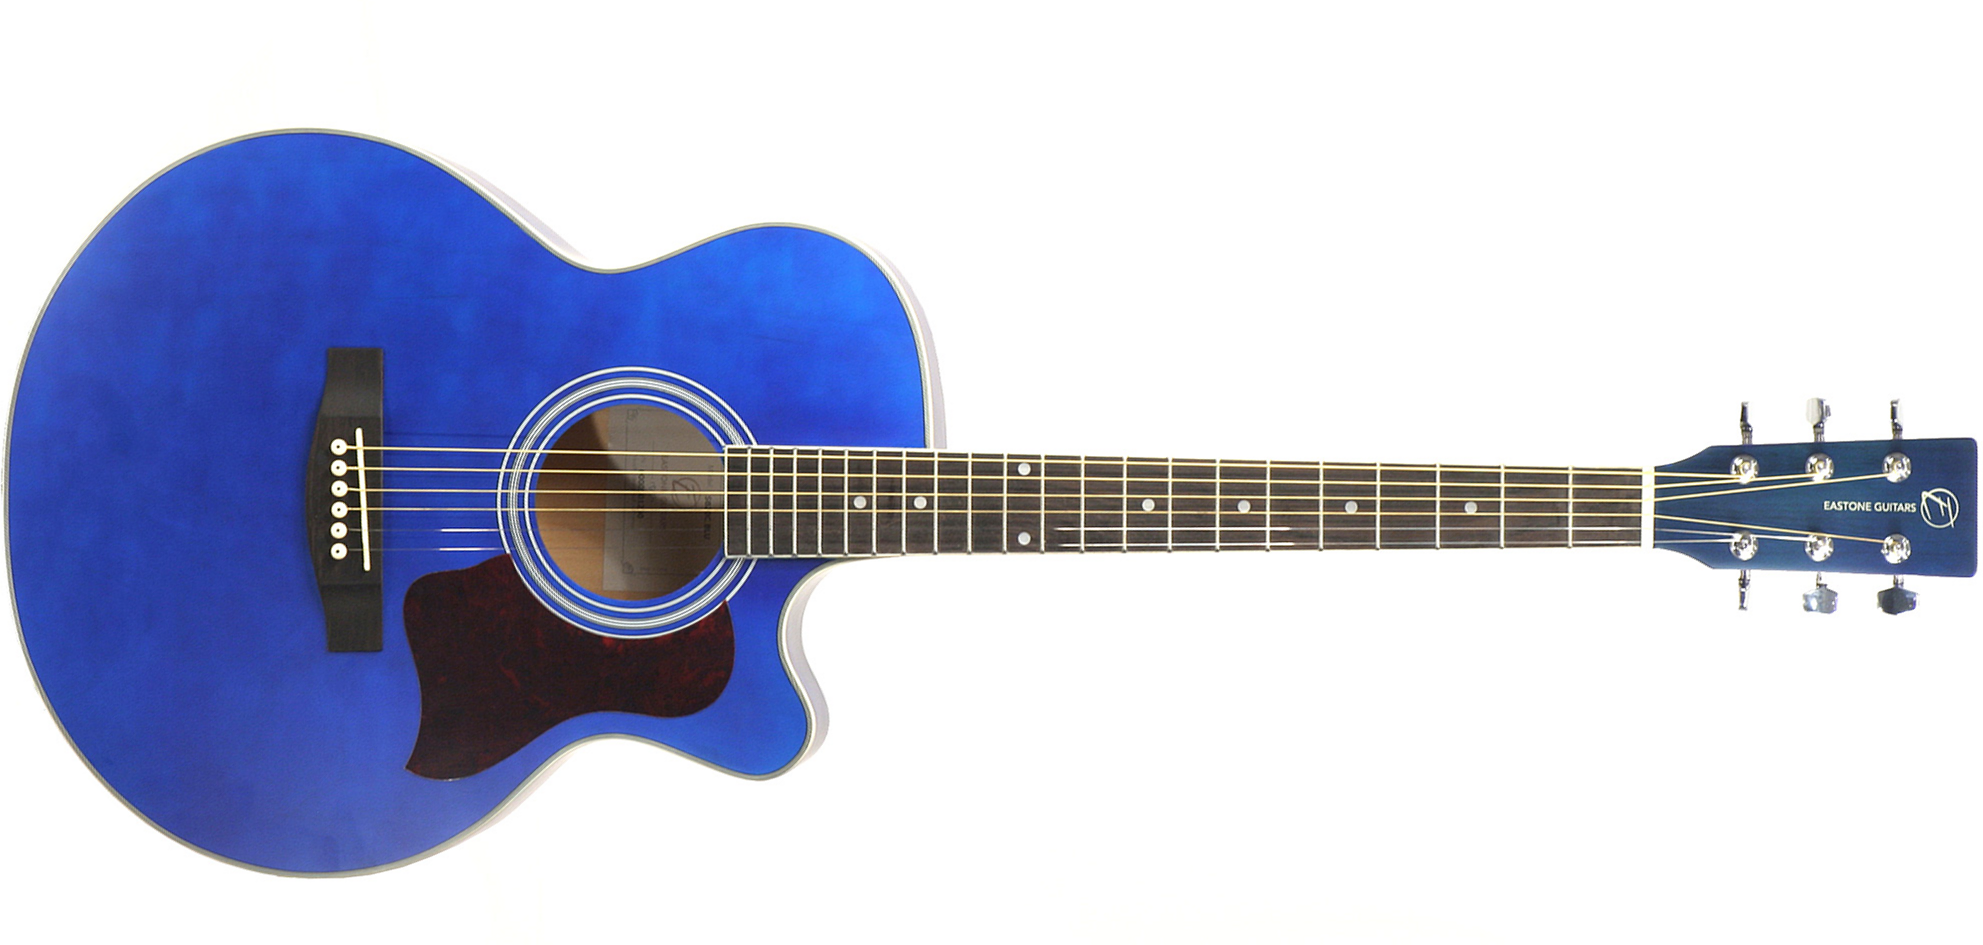 Eastone Sb20c-blu - Blue - Acoustic guitar & electro - Main picture